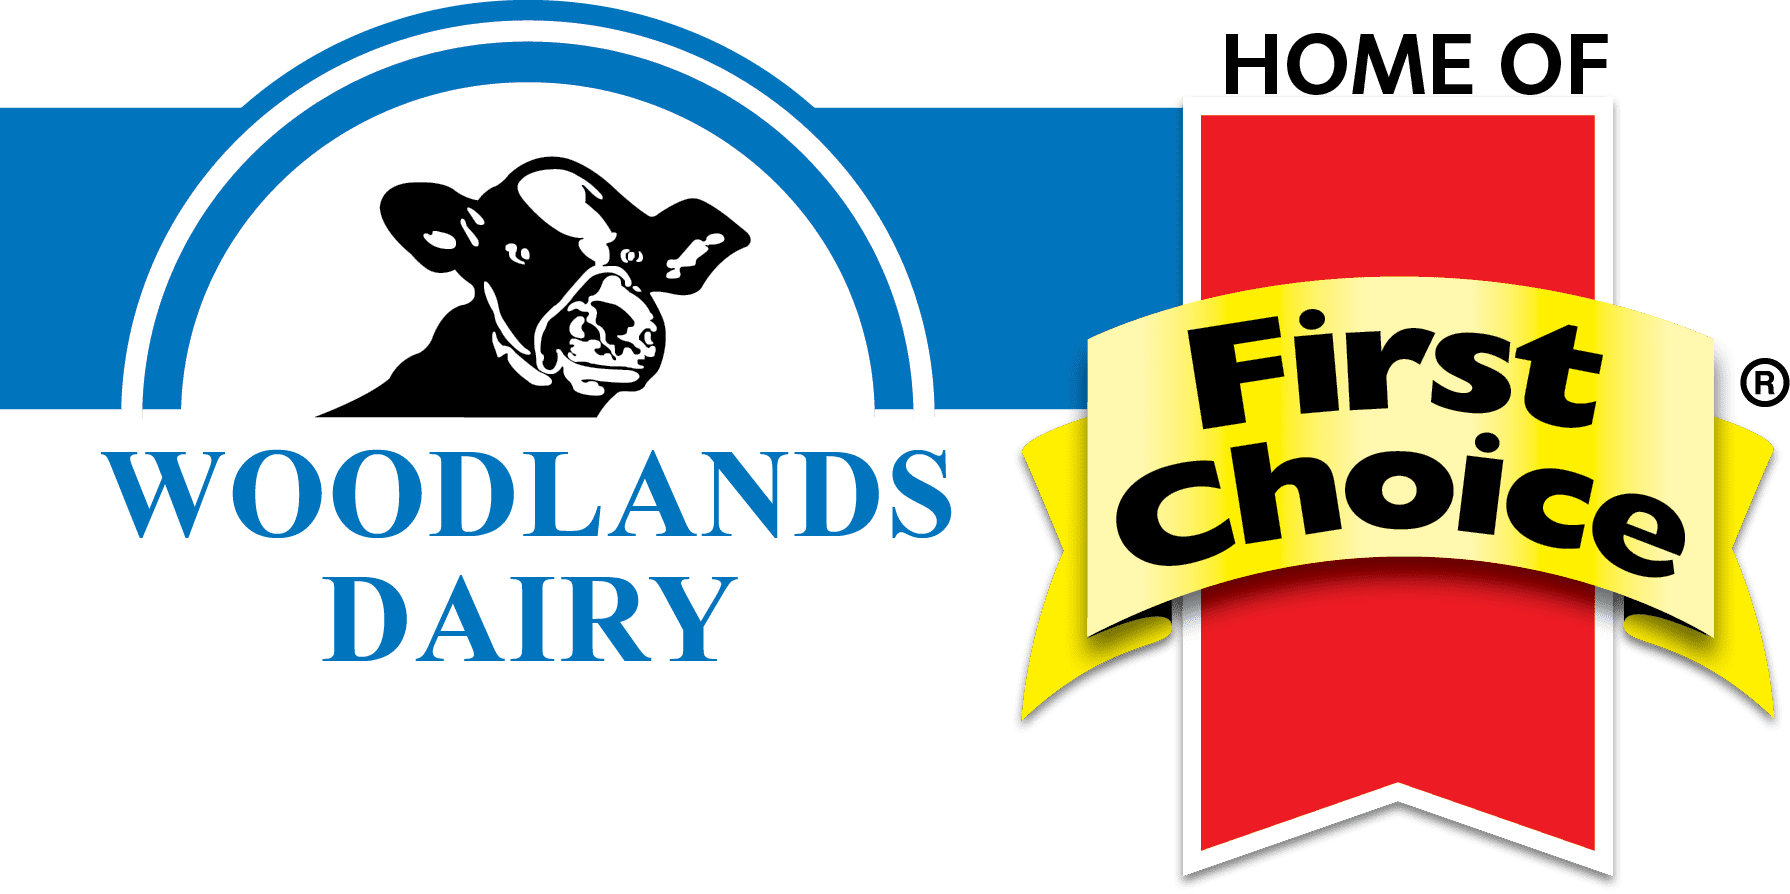 Woodlands Dairy logo